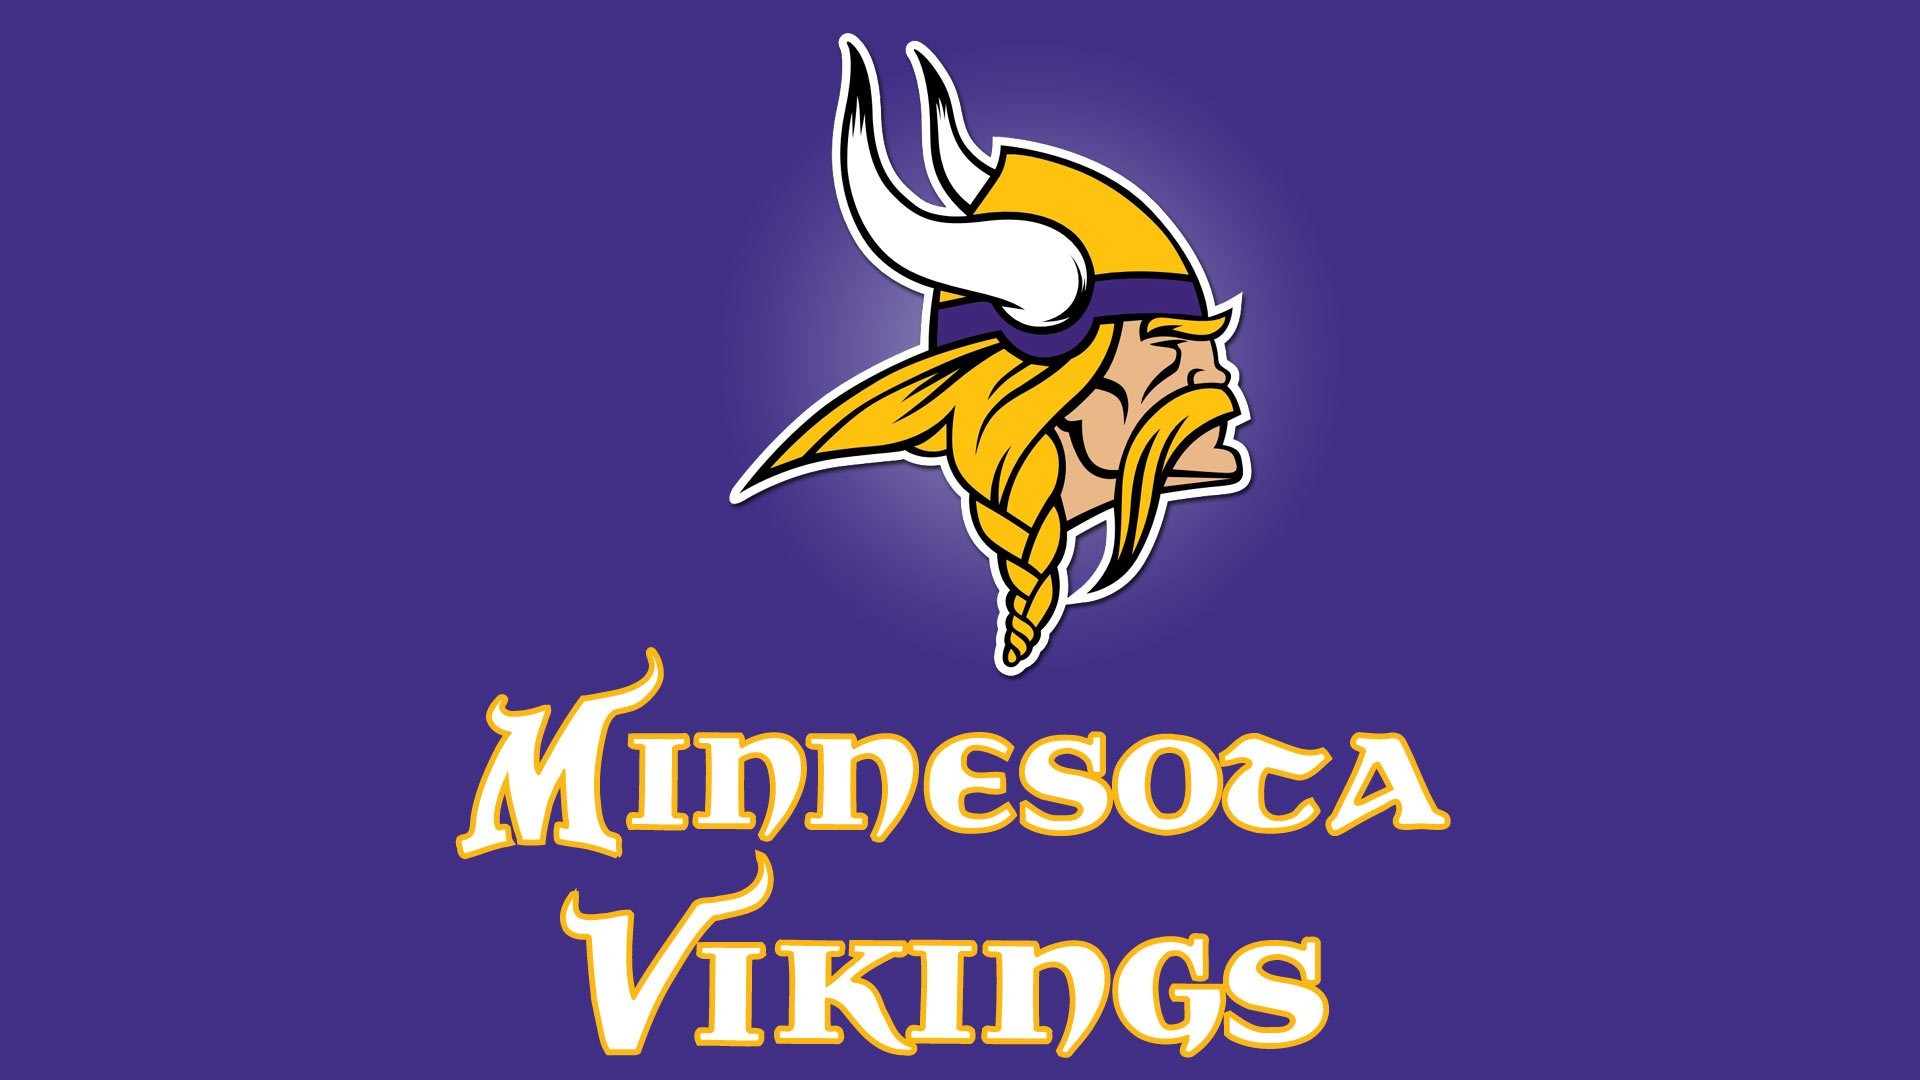 1920x1080 ... Minnesota Vikings logo Hd 1080p high quality Wallpaper screen size  1920X1080